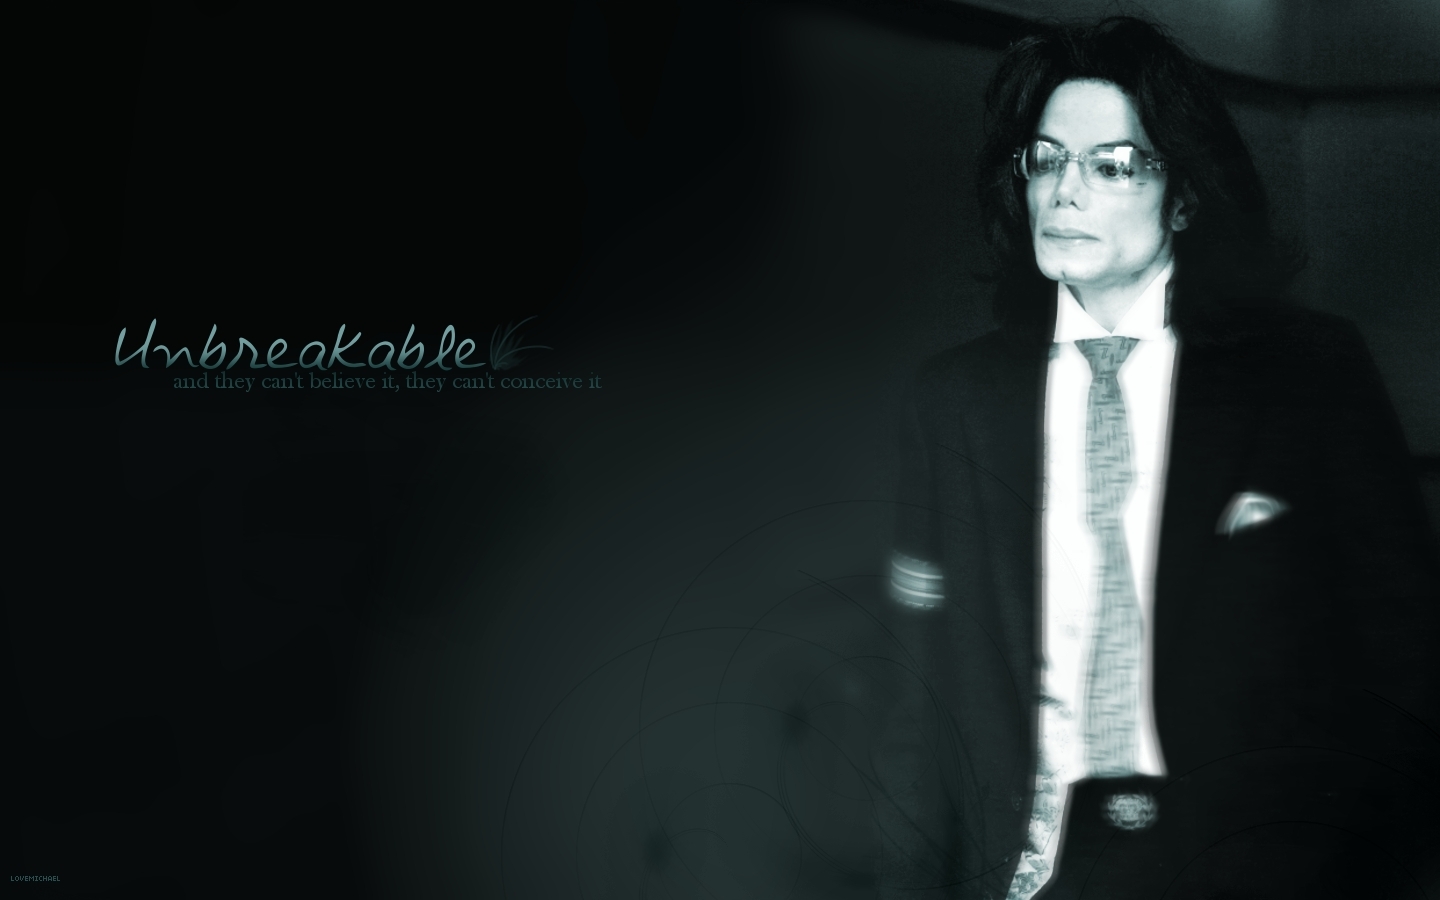 Michael Jackson The Legend Wallpaper